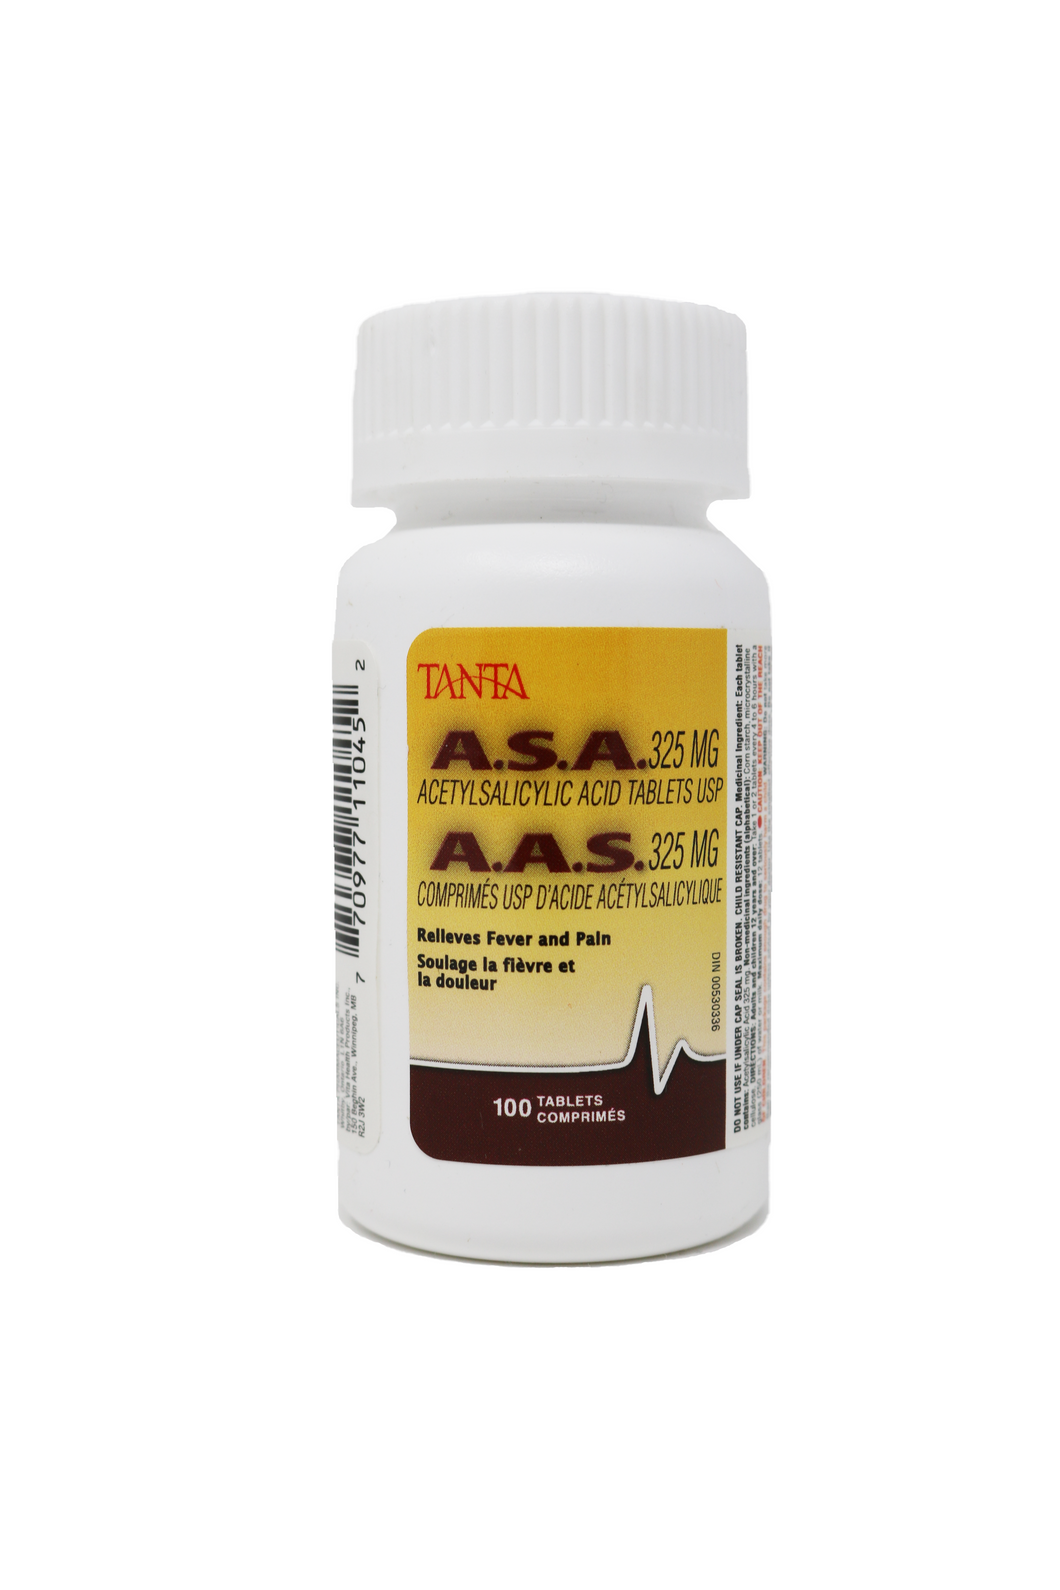 Tanta Pharmaceuticals Acetylsalicyclic Acid Tablets USP